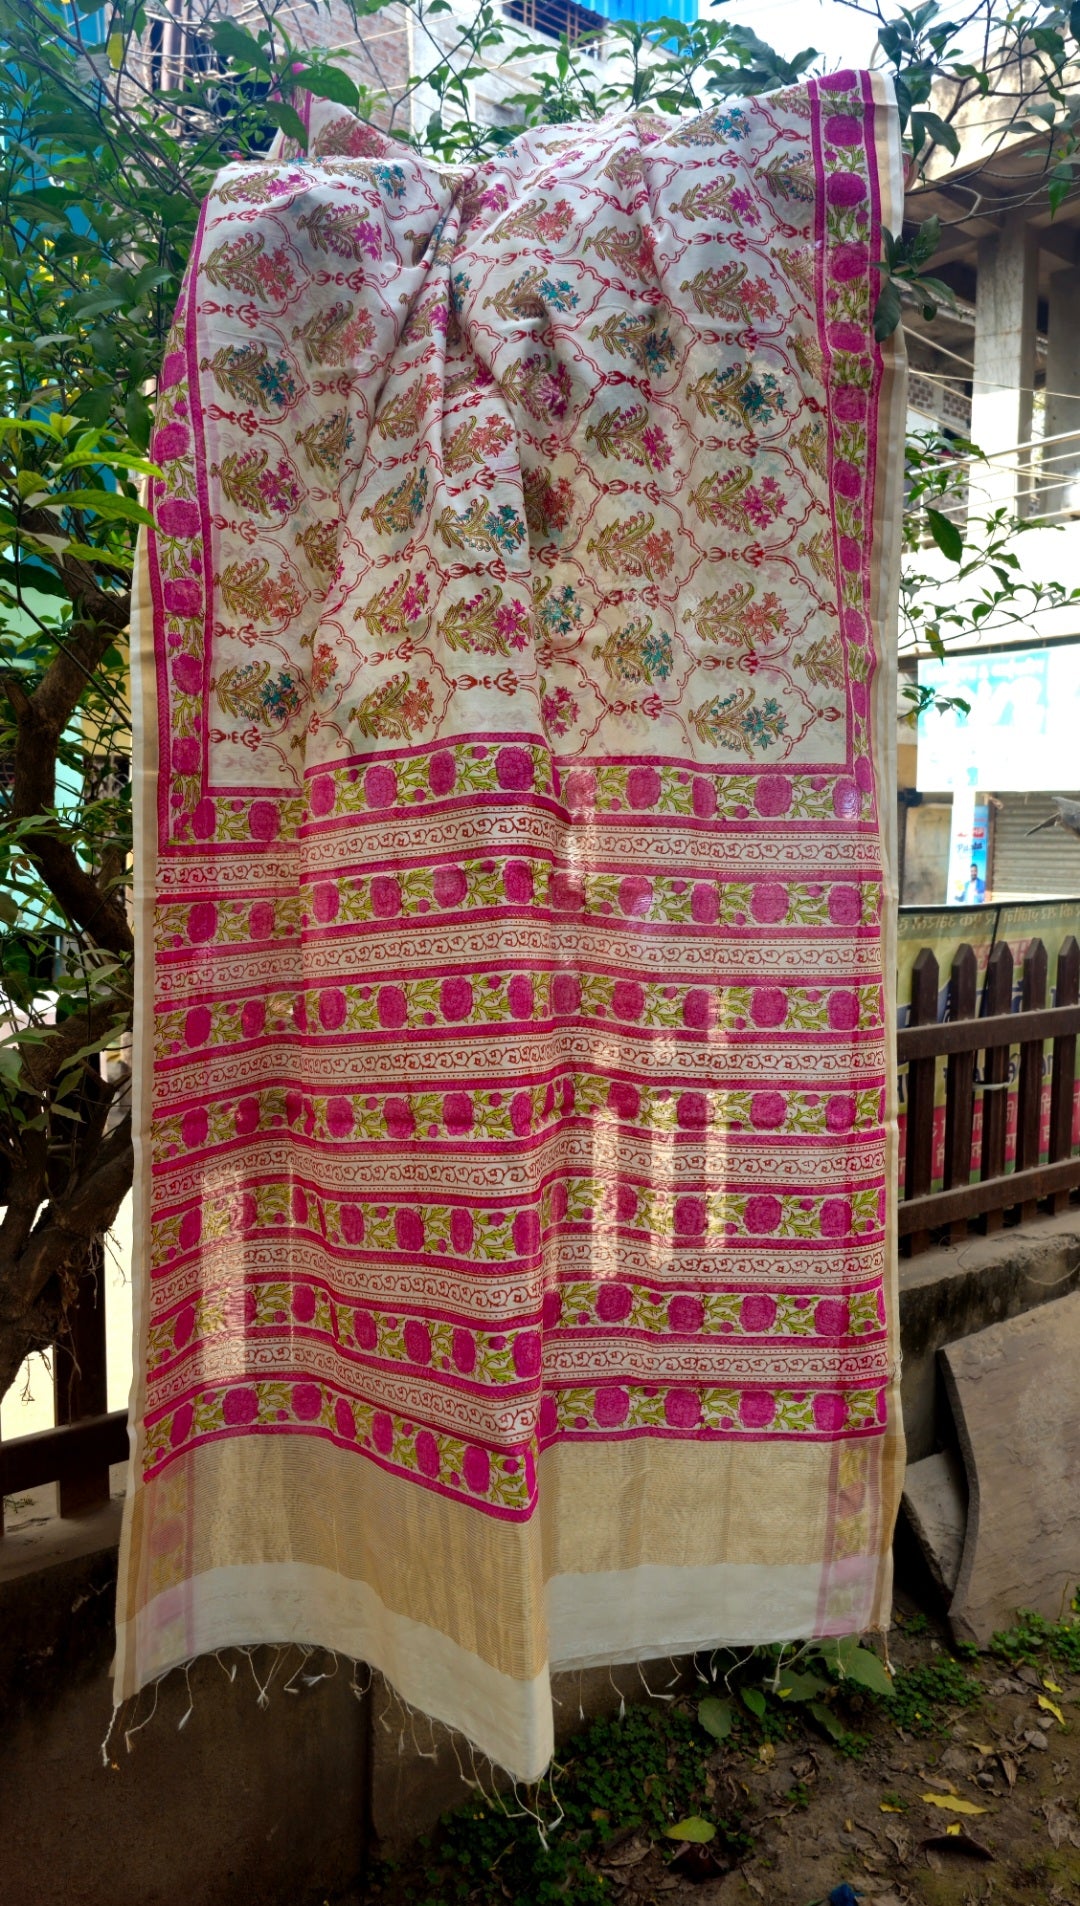 Saree with Multicolor Hand Block prints and Gold Zari Borders.